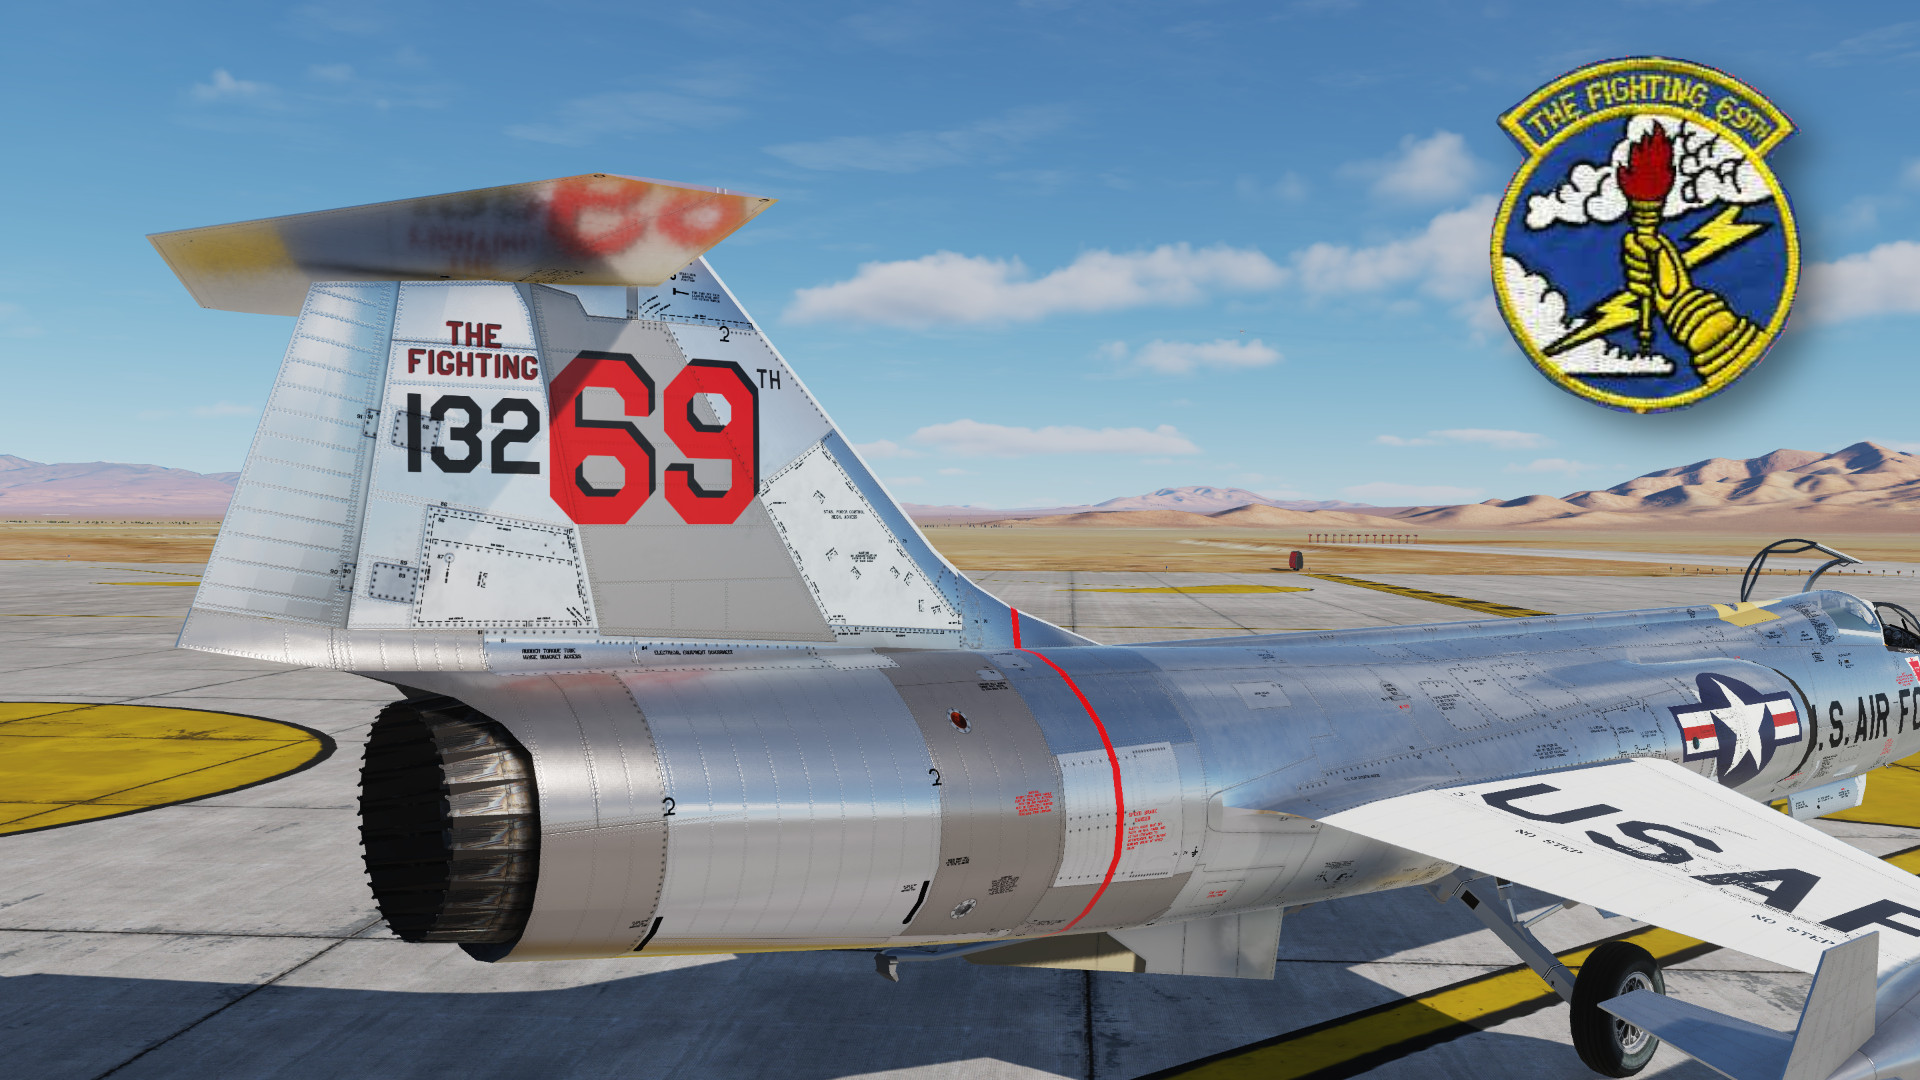 F-104 Starfighter - USAF & Luftwaffe "The Fighting 69th" Skin